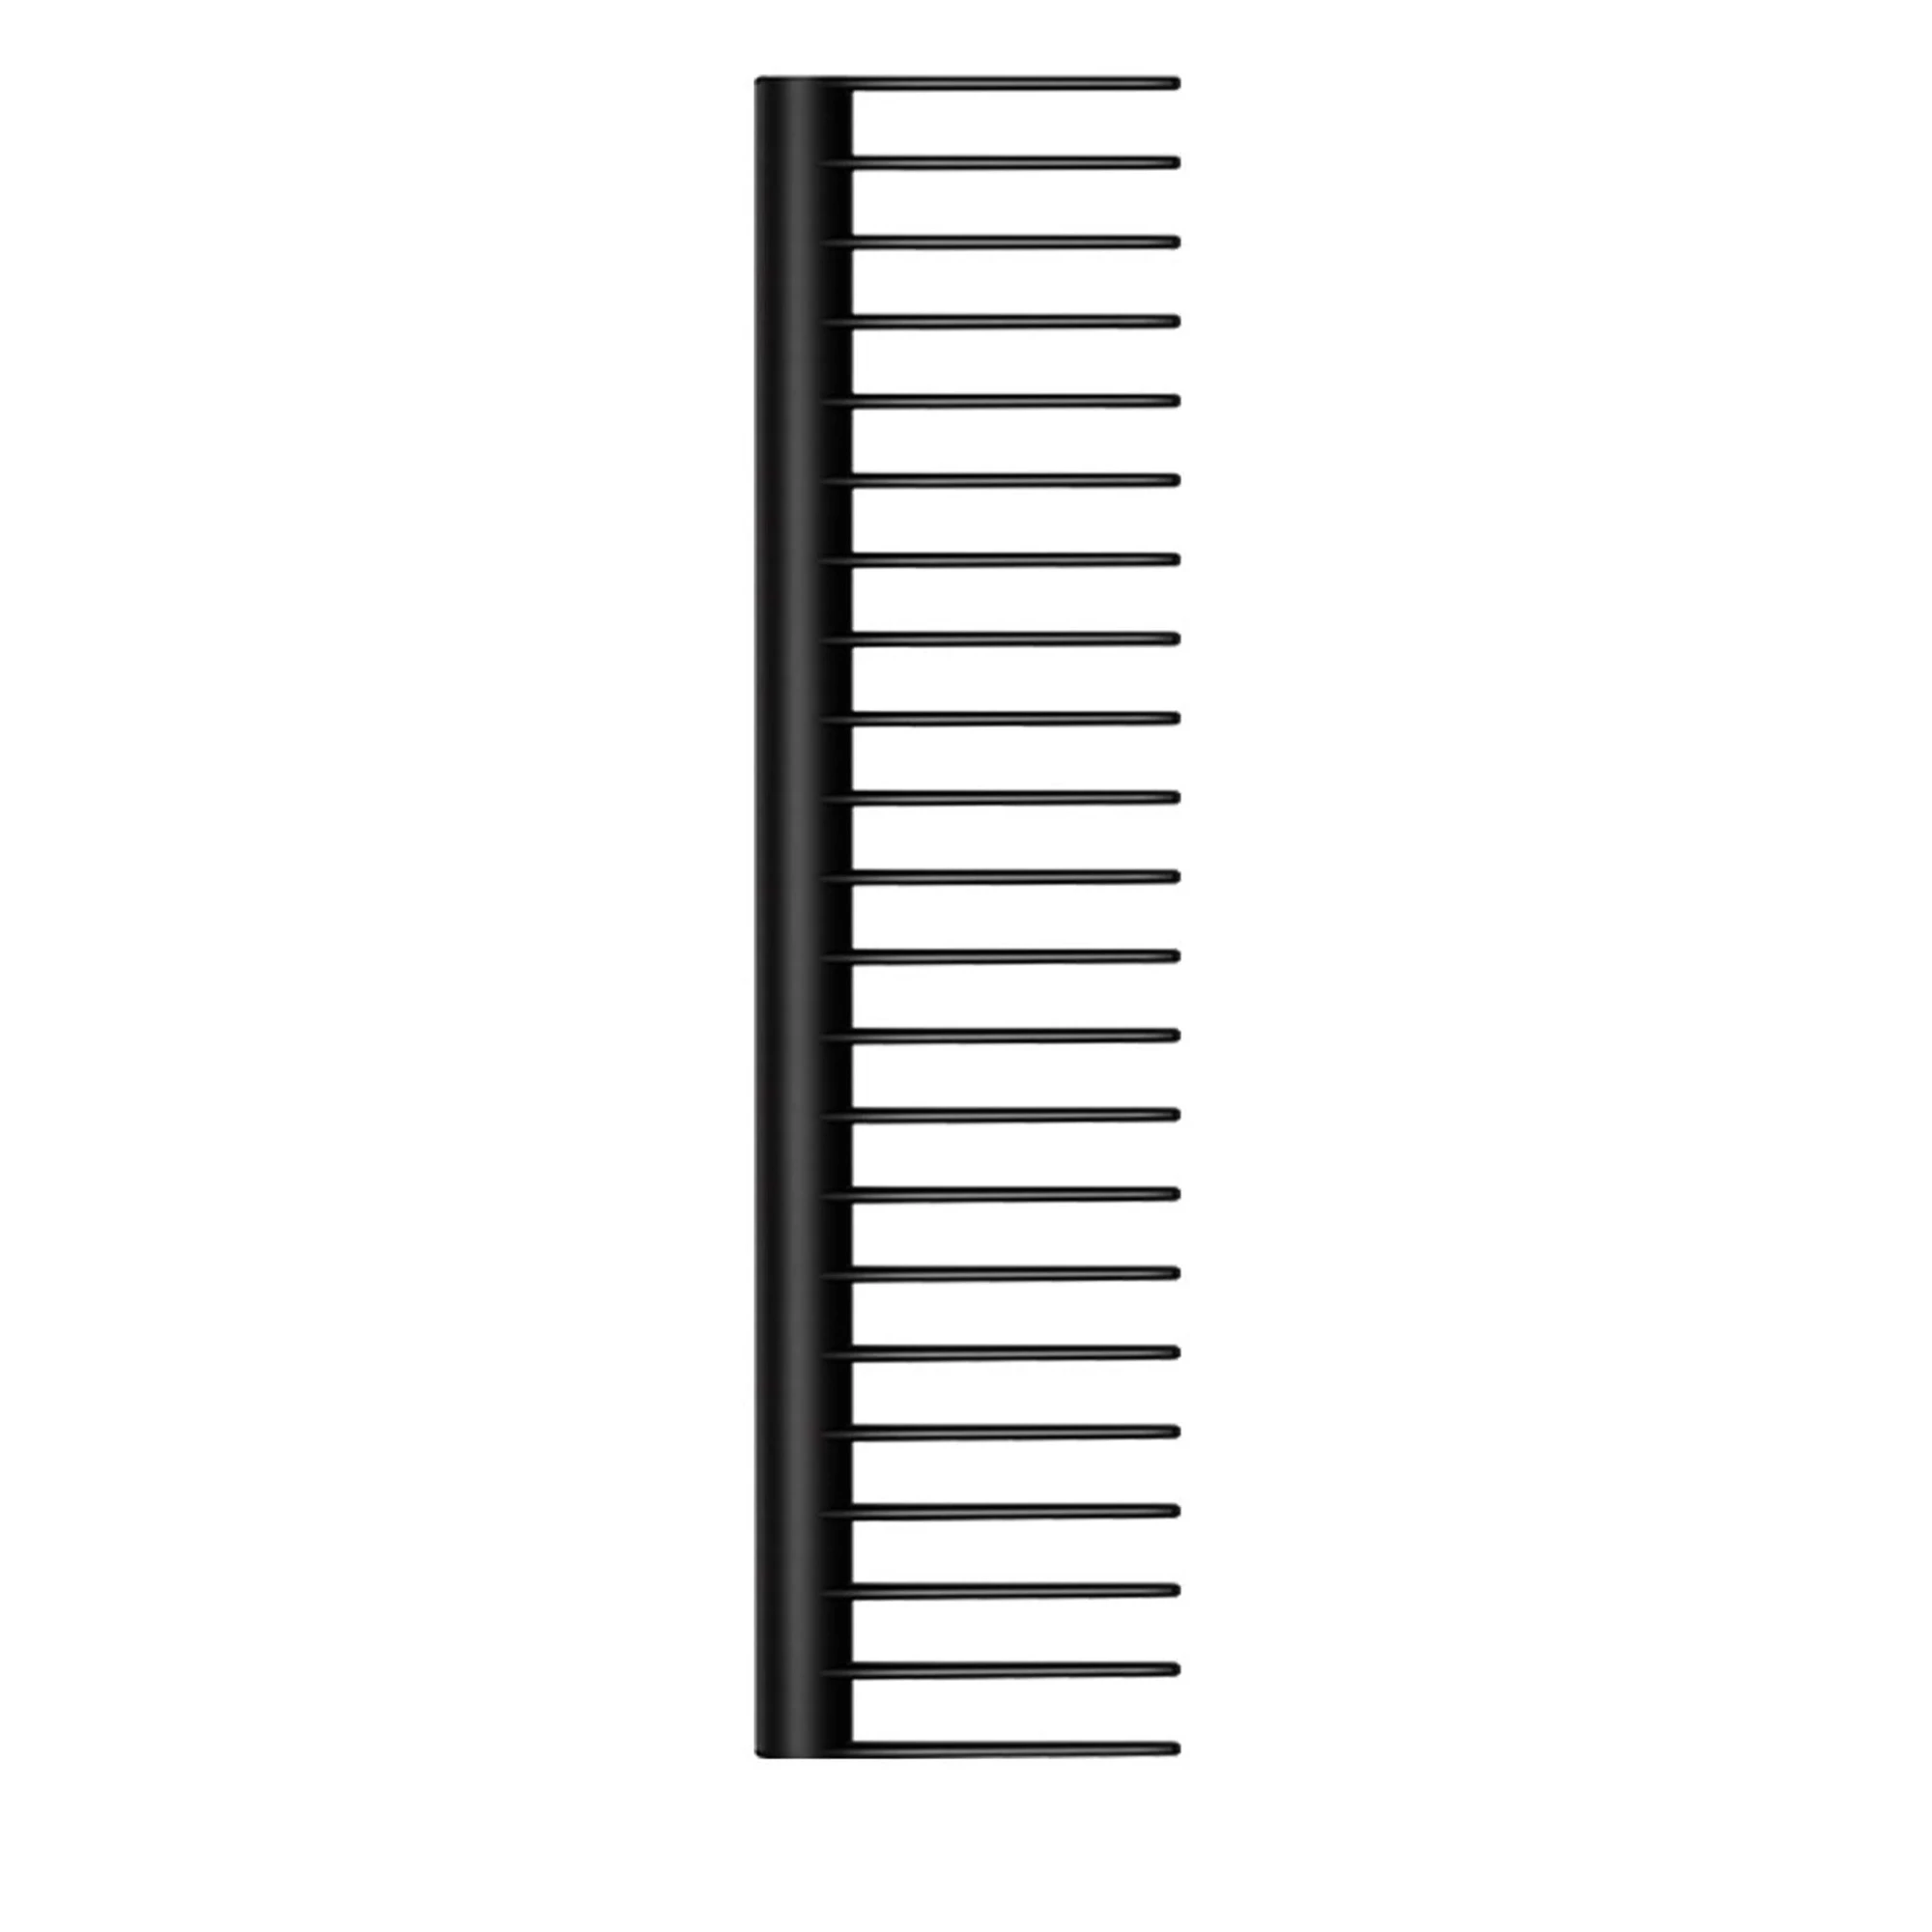 Гребінець Dyson Designed Detangling Comb Black/Copper (965003-04)